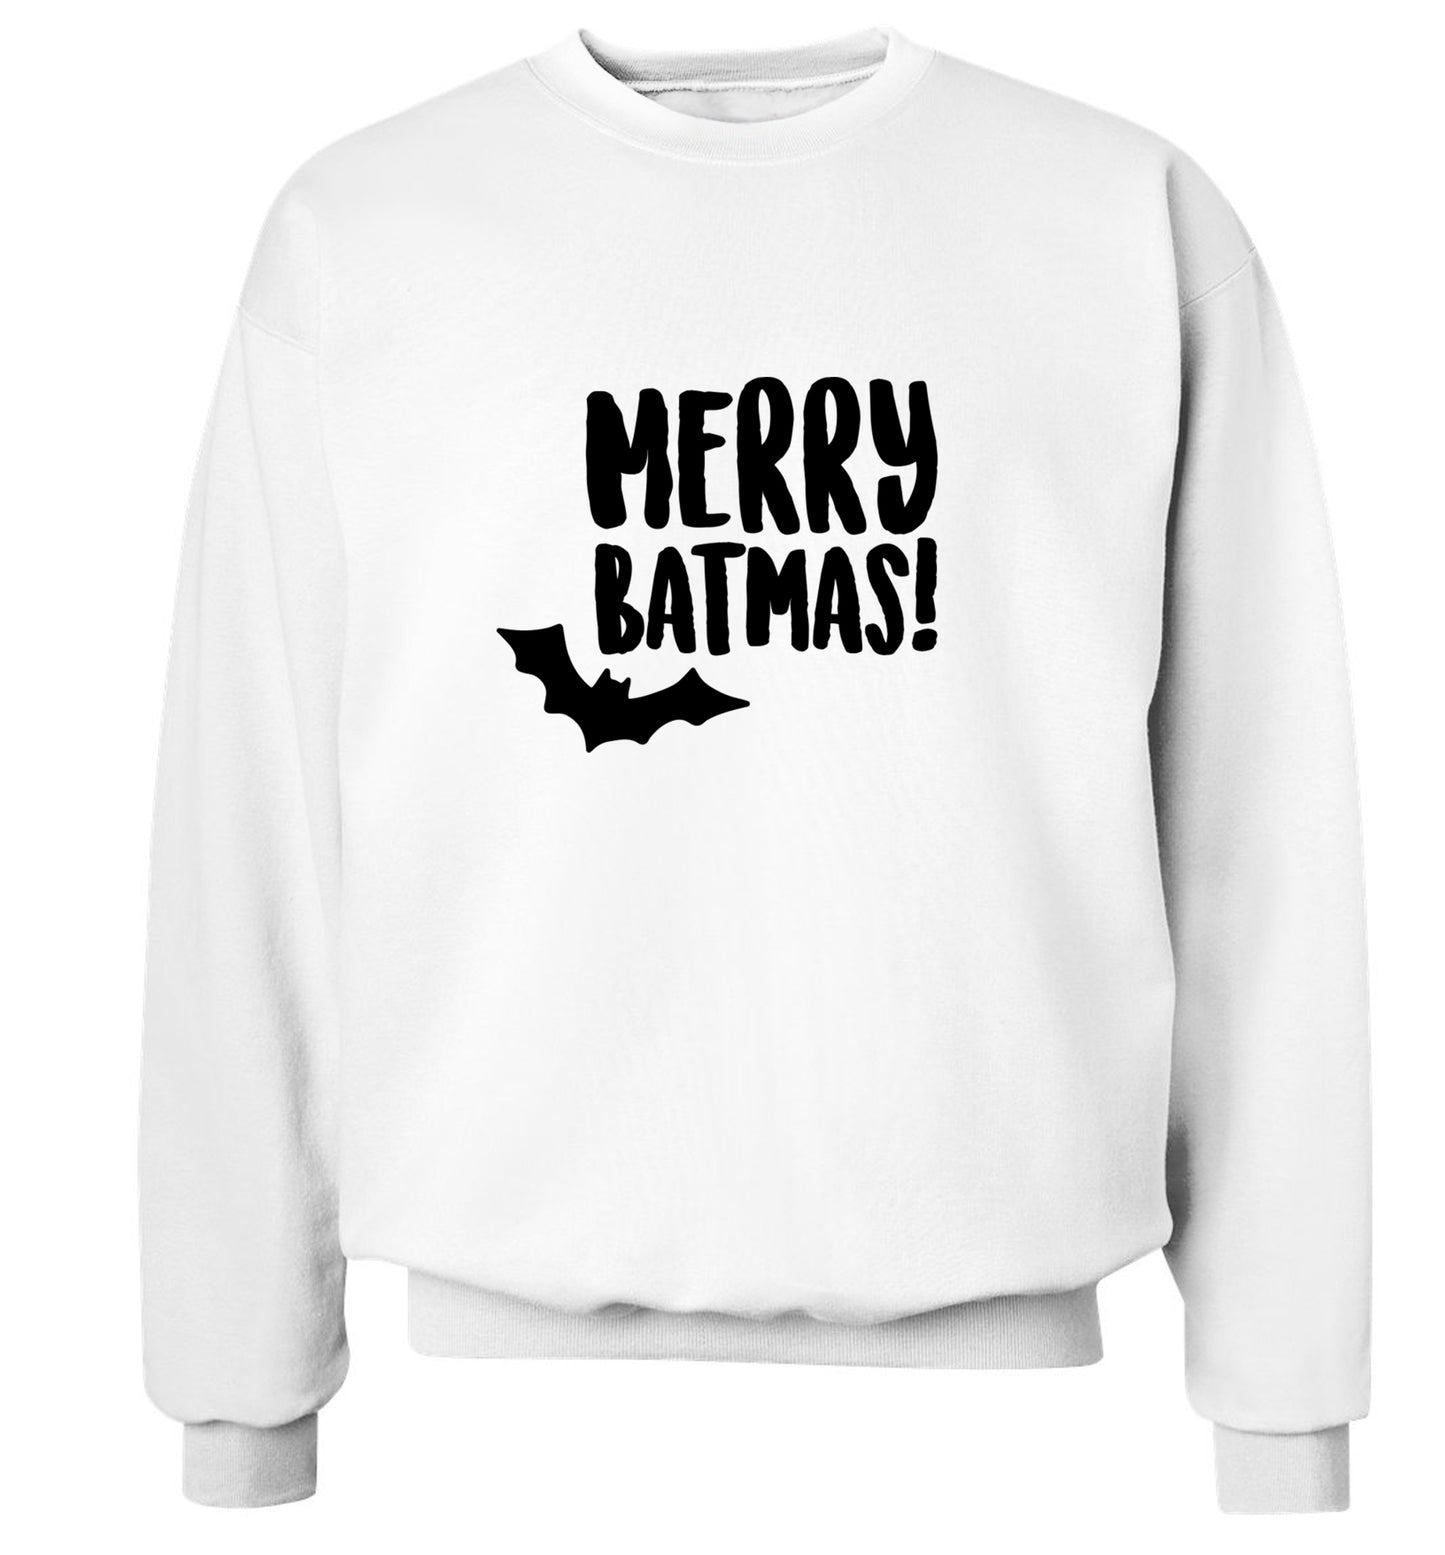 Merry Batmas Adult's unisex white Sweater 2XL